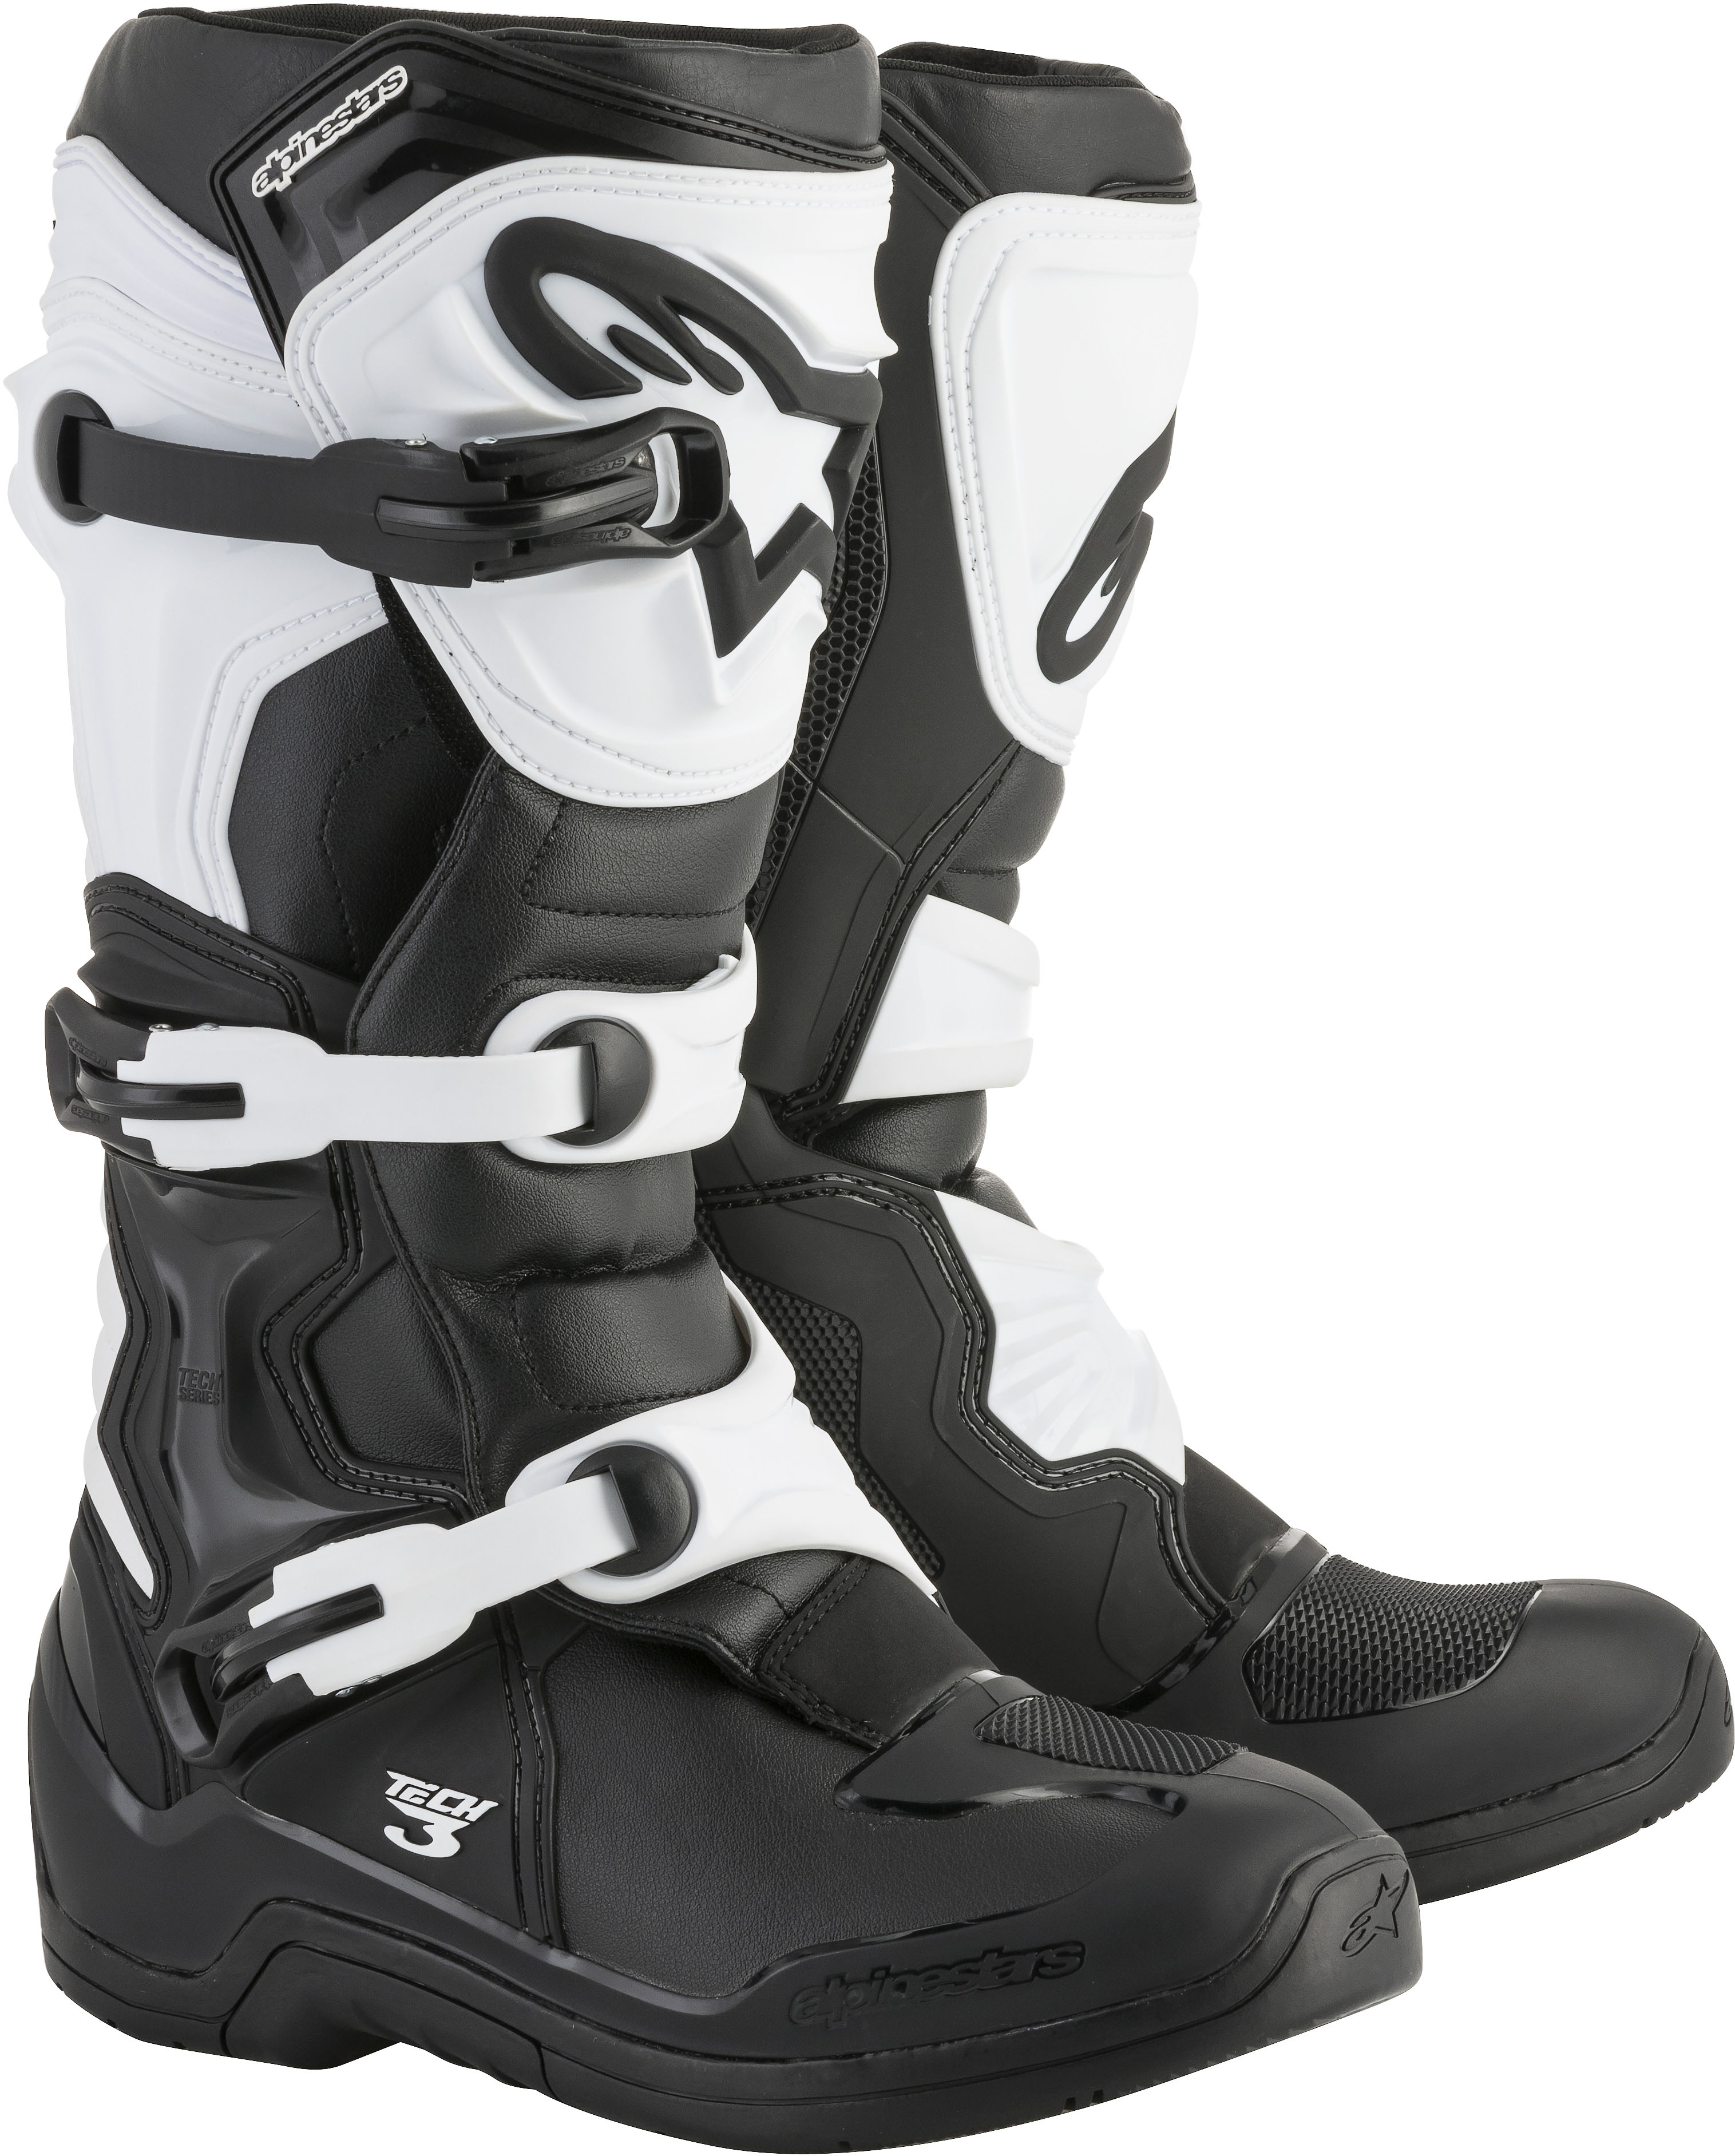 Tech 3 Boots Black/White Size 7 - Click Image to Close